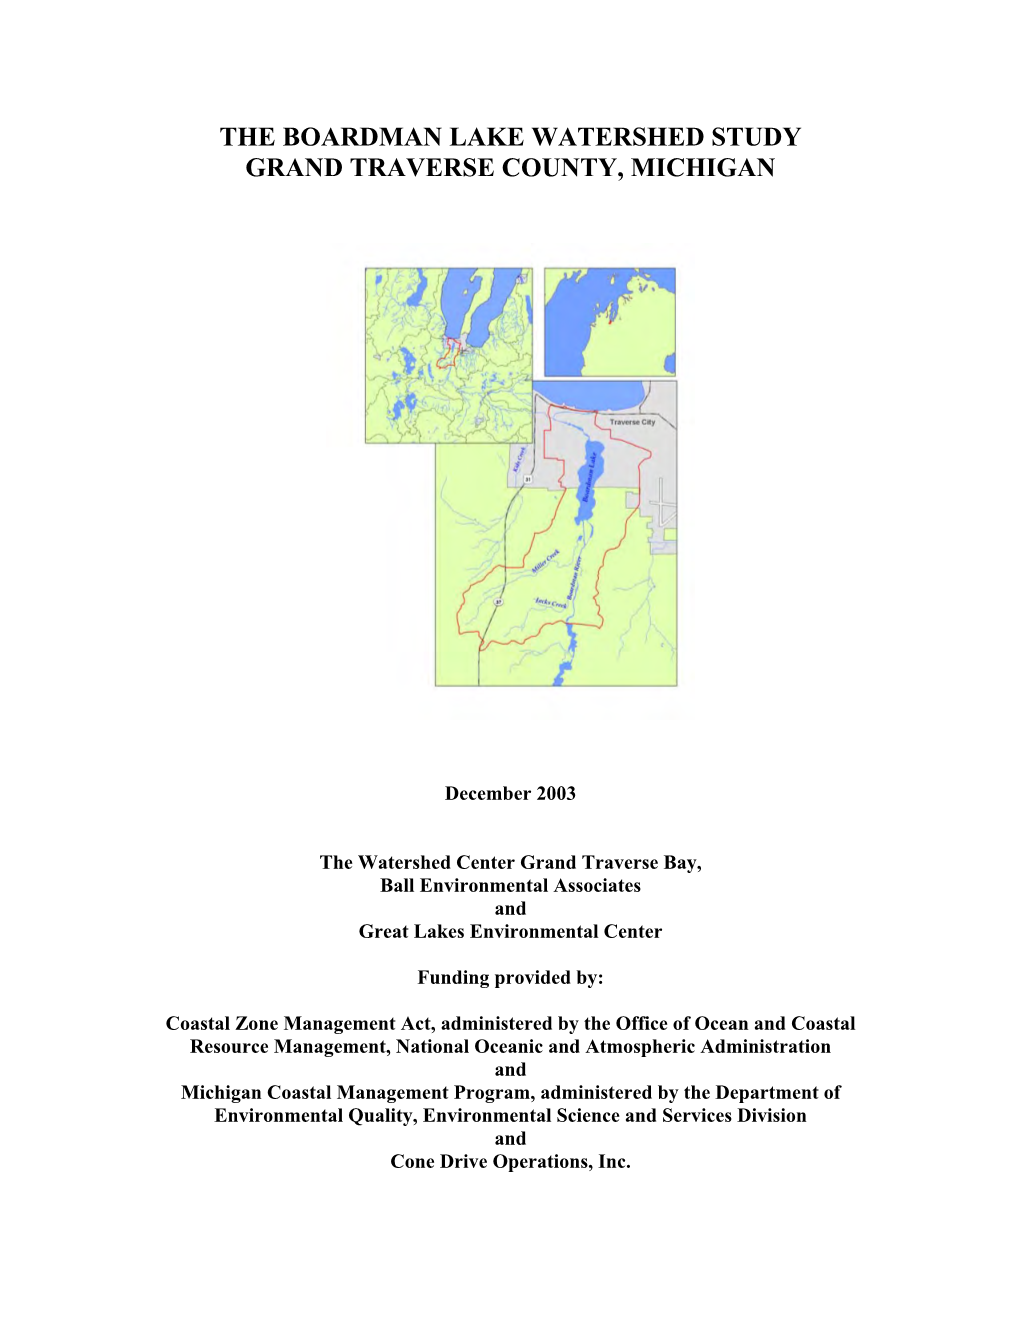 The Boardman Lake Watershed Study Grand Traverse County, Michigan